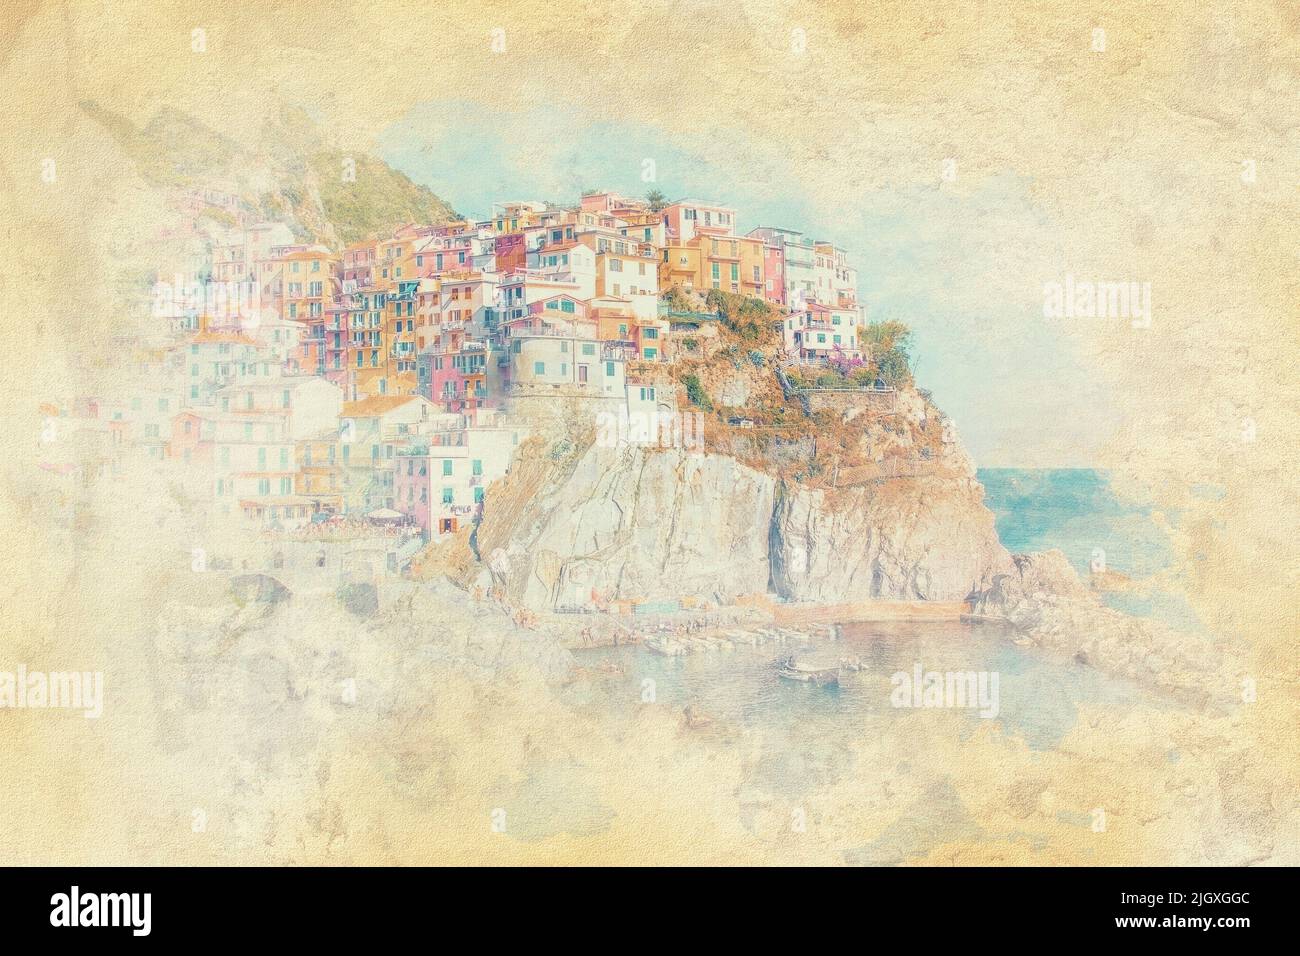 Manarola village in Cinque Terre National Park - Watercolor effect illustration Stock Photo